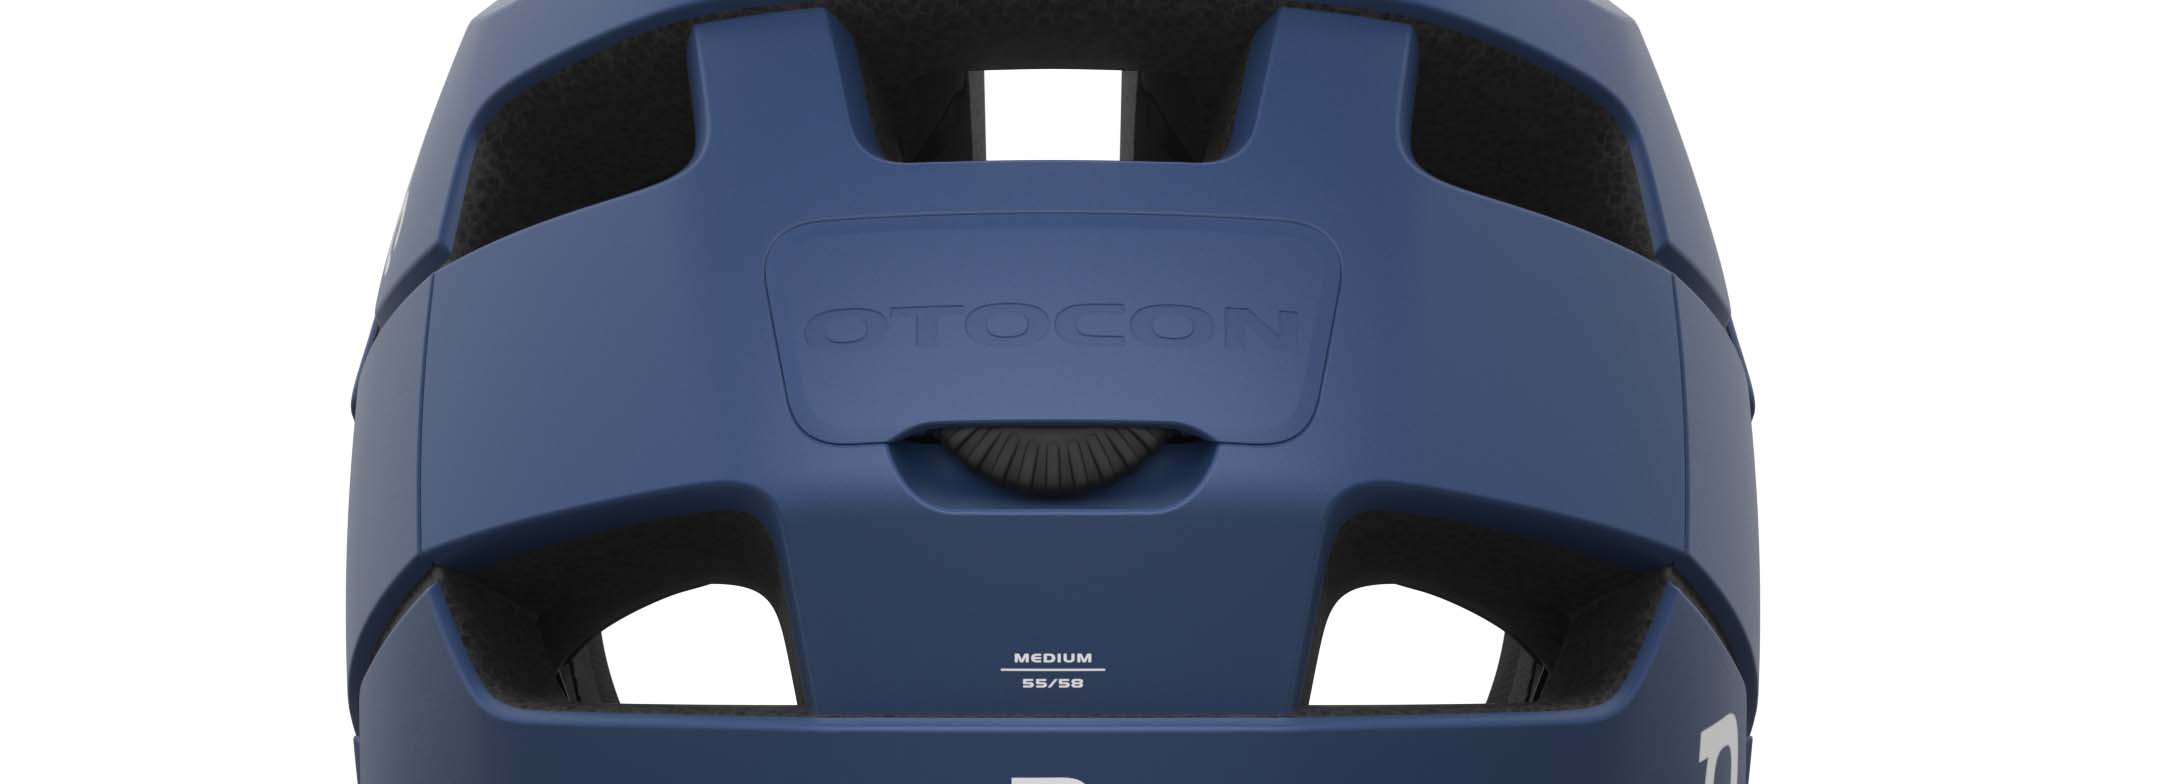 POC Otocon & Otocon Race MIPS Full Face Helmet Released |